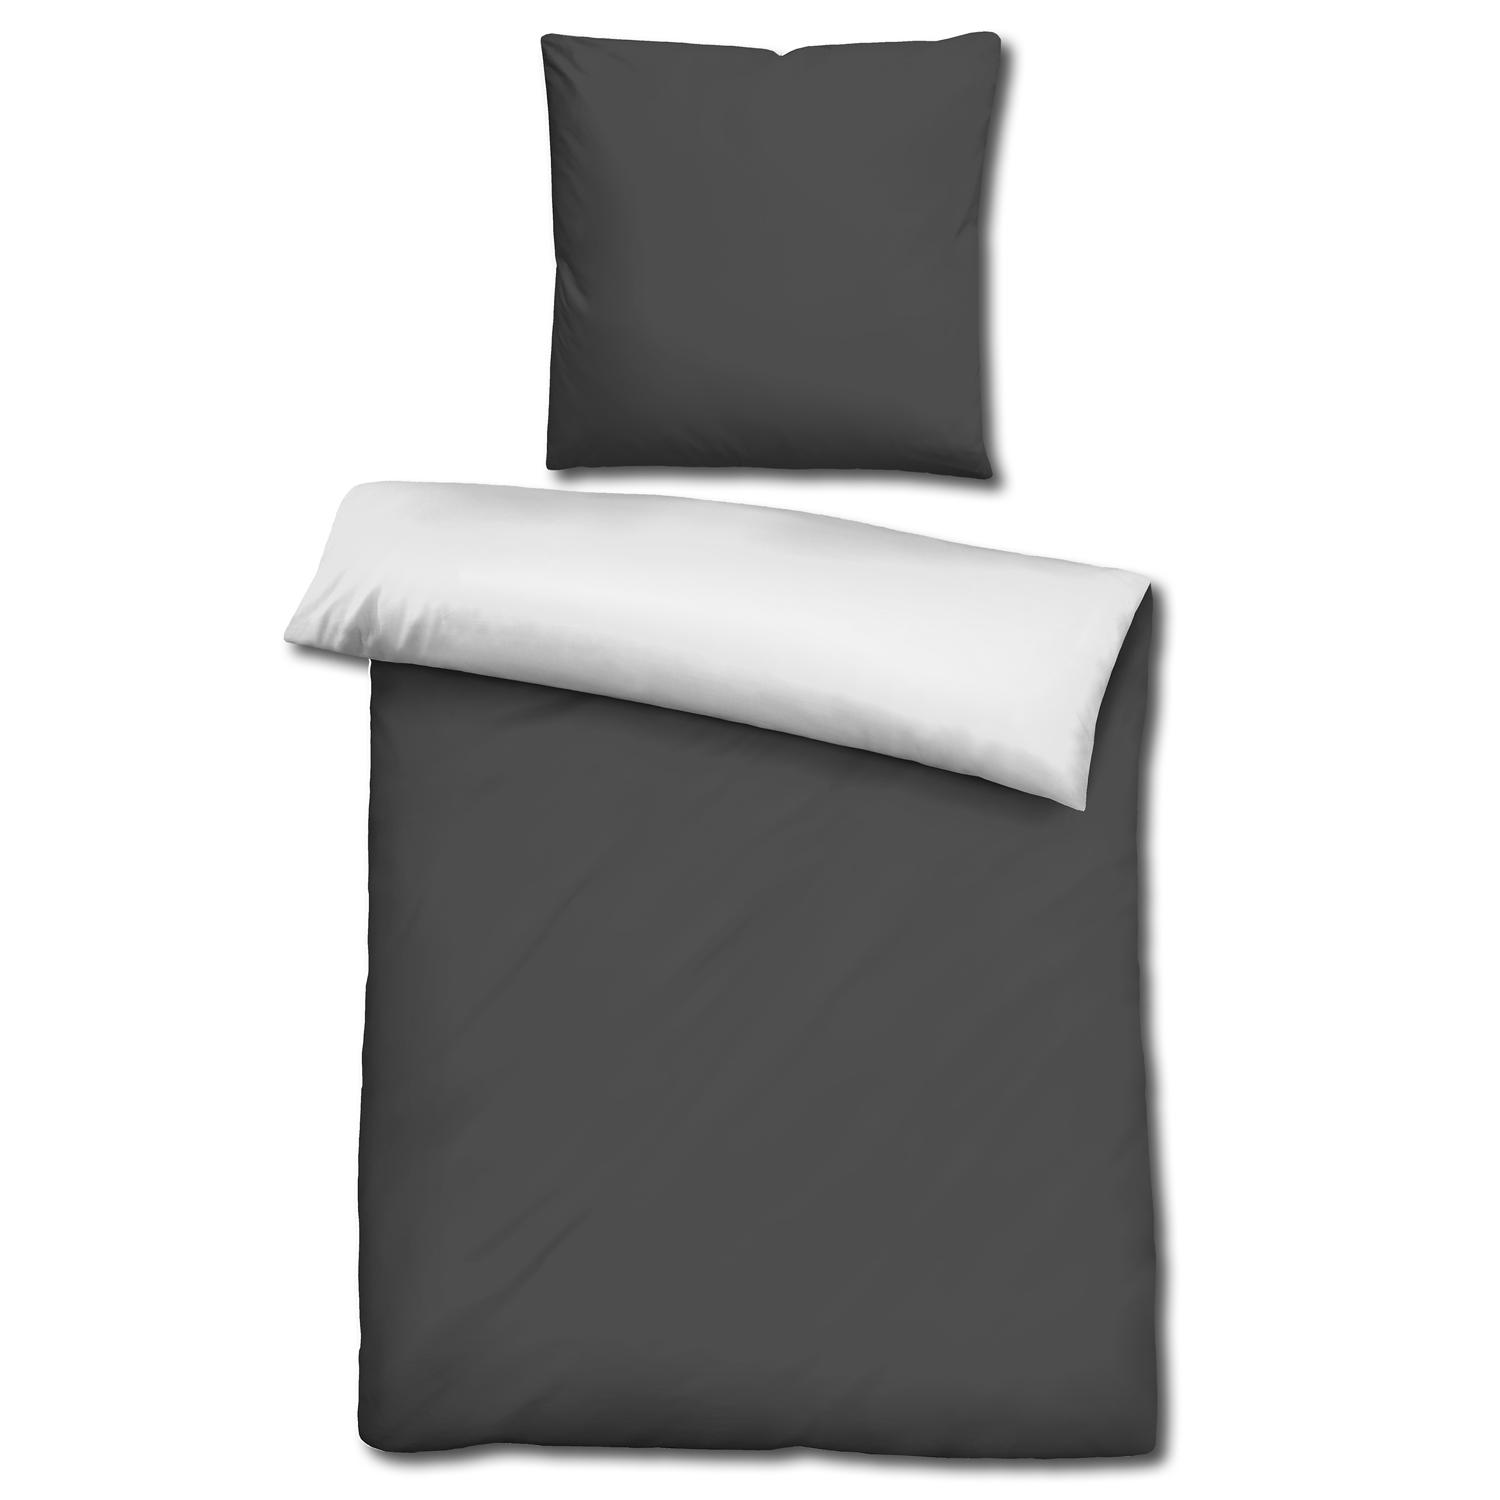 CloudComfort Basic obojstranná posteľná bielizeň čierna/biela 135 x 200 + 80 x 80 cm